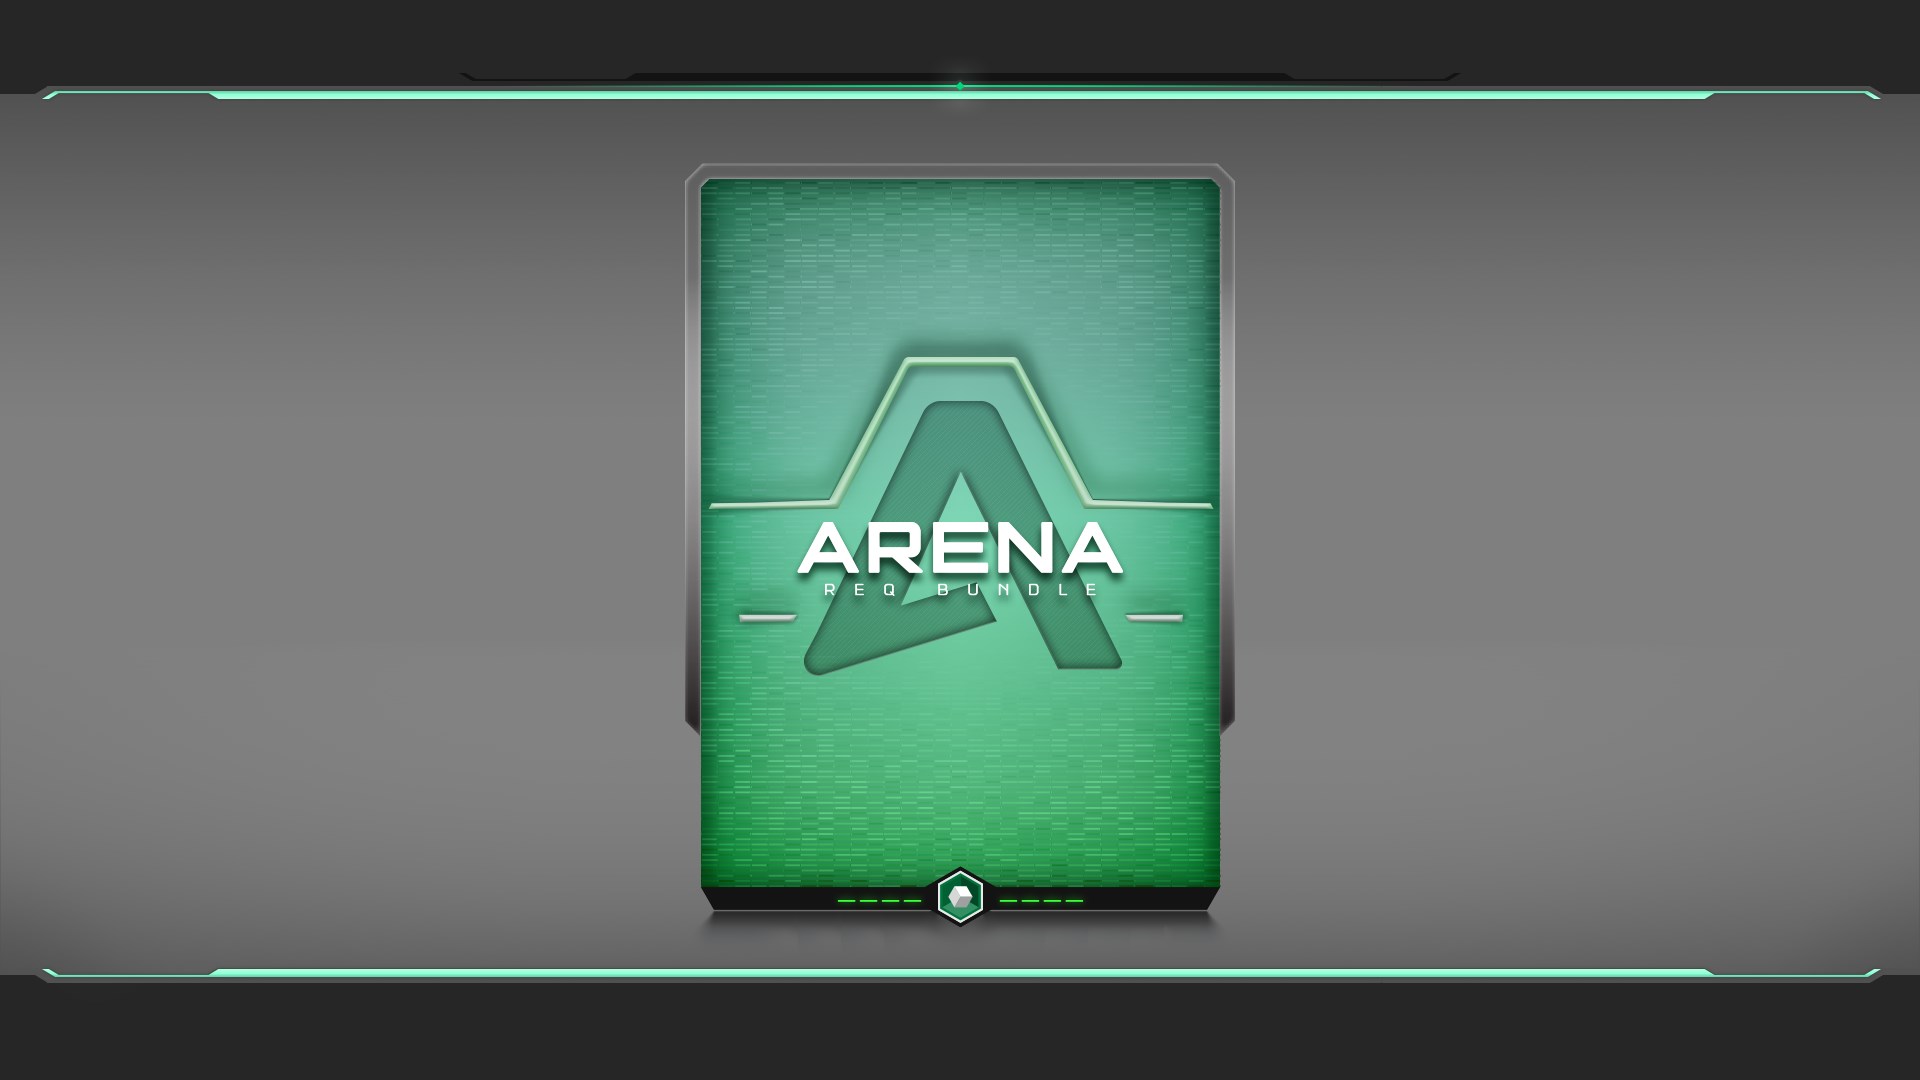 Halo 5 Guardians - Arena REQ Bundle DLC EU XBOX One CD Key 26.55 usd